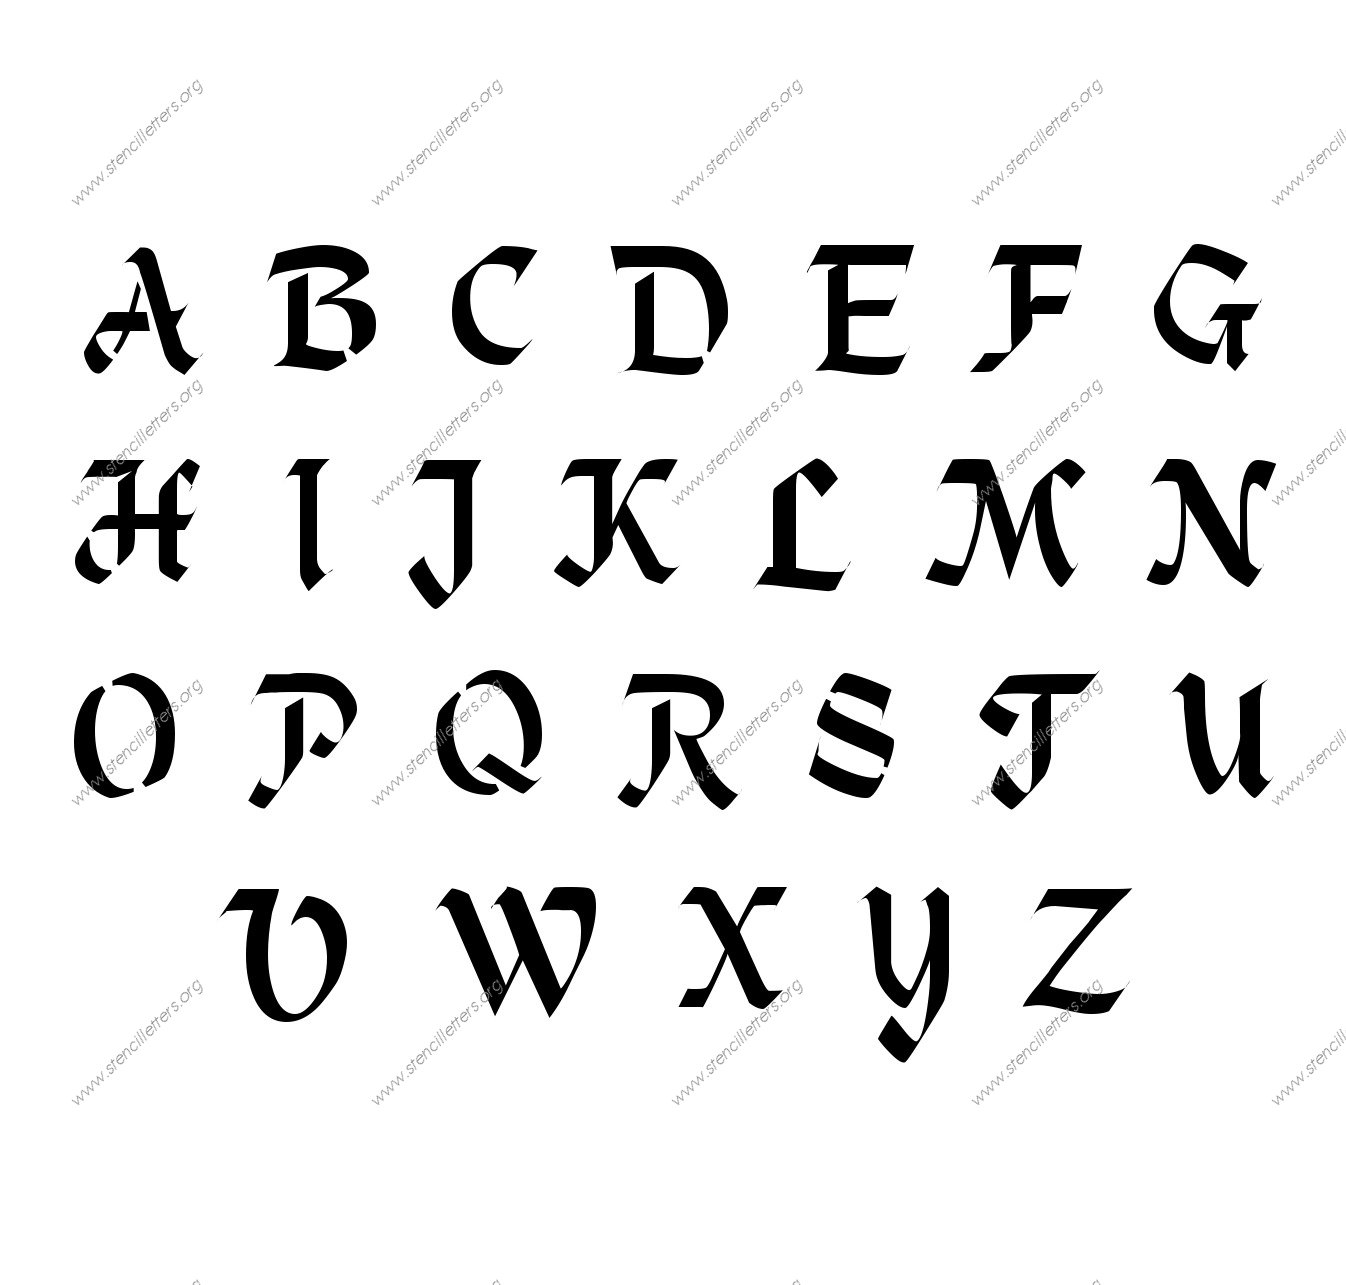 Gothic Calligraphy A to Z alphabet stencils